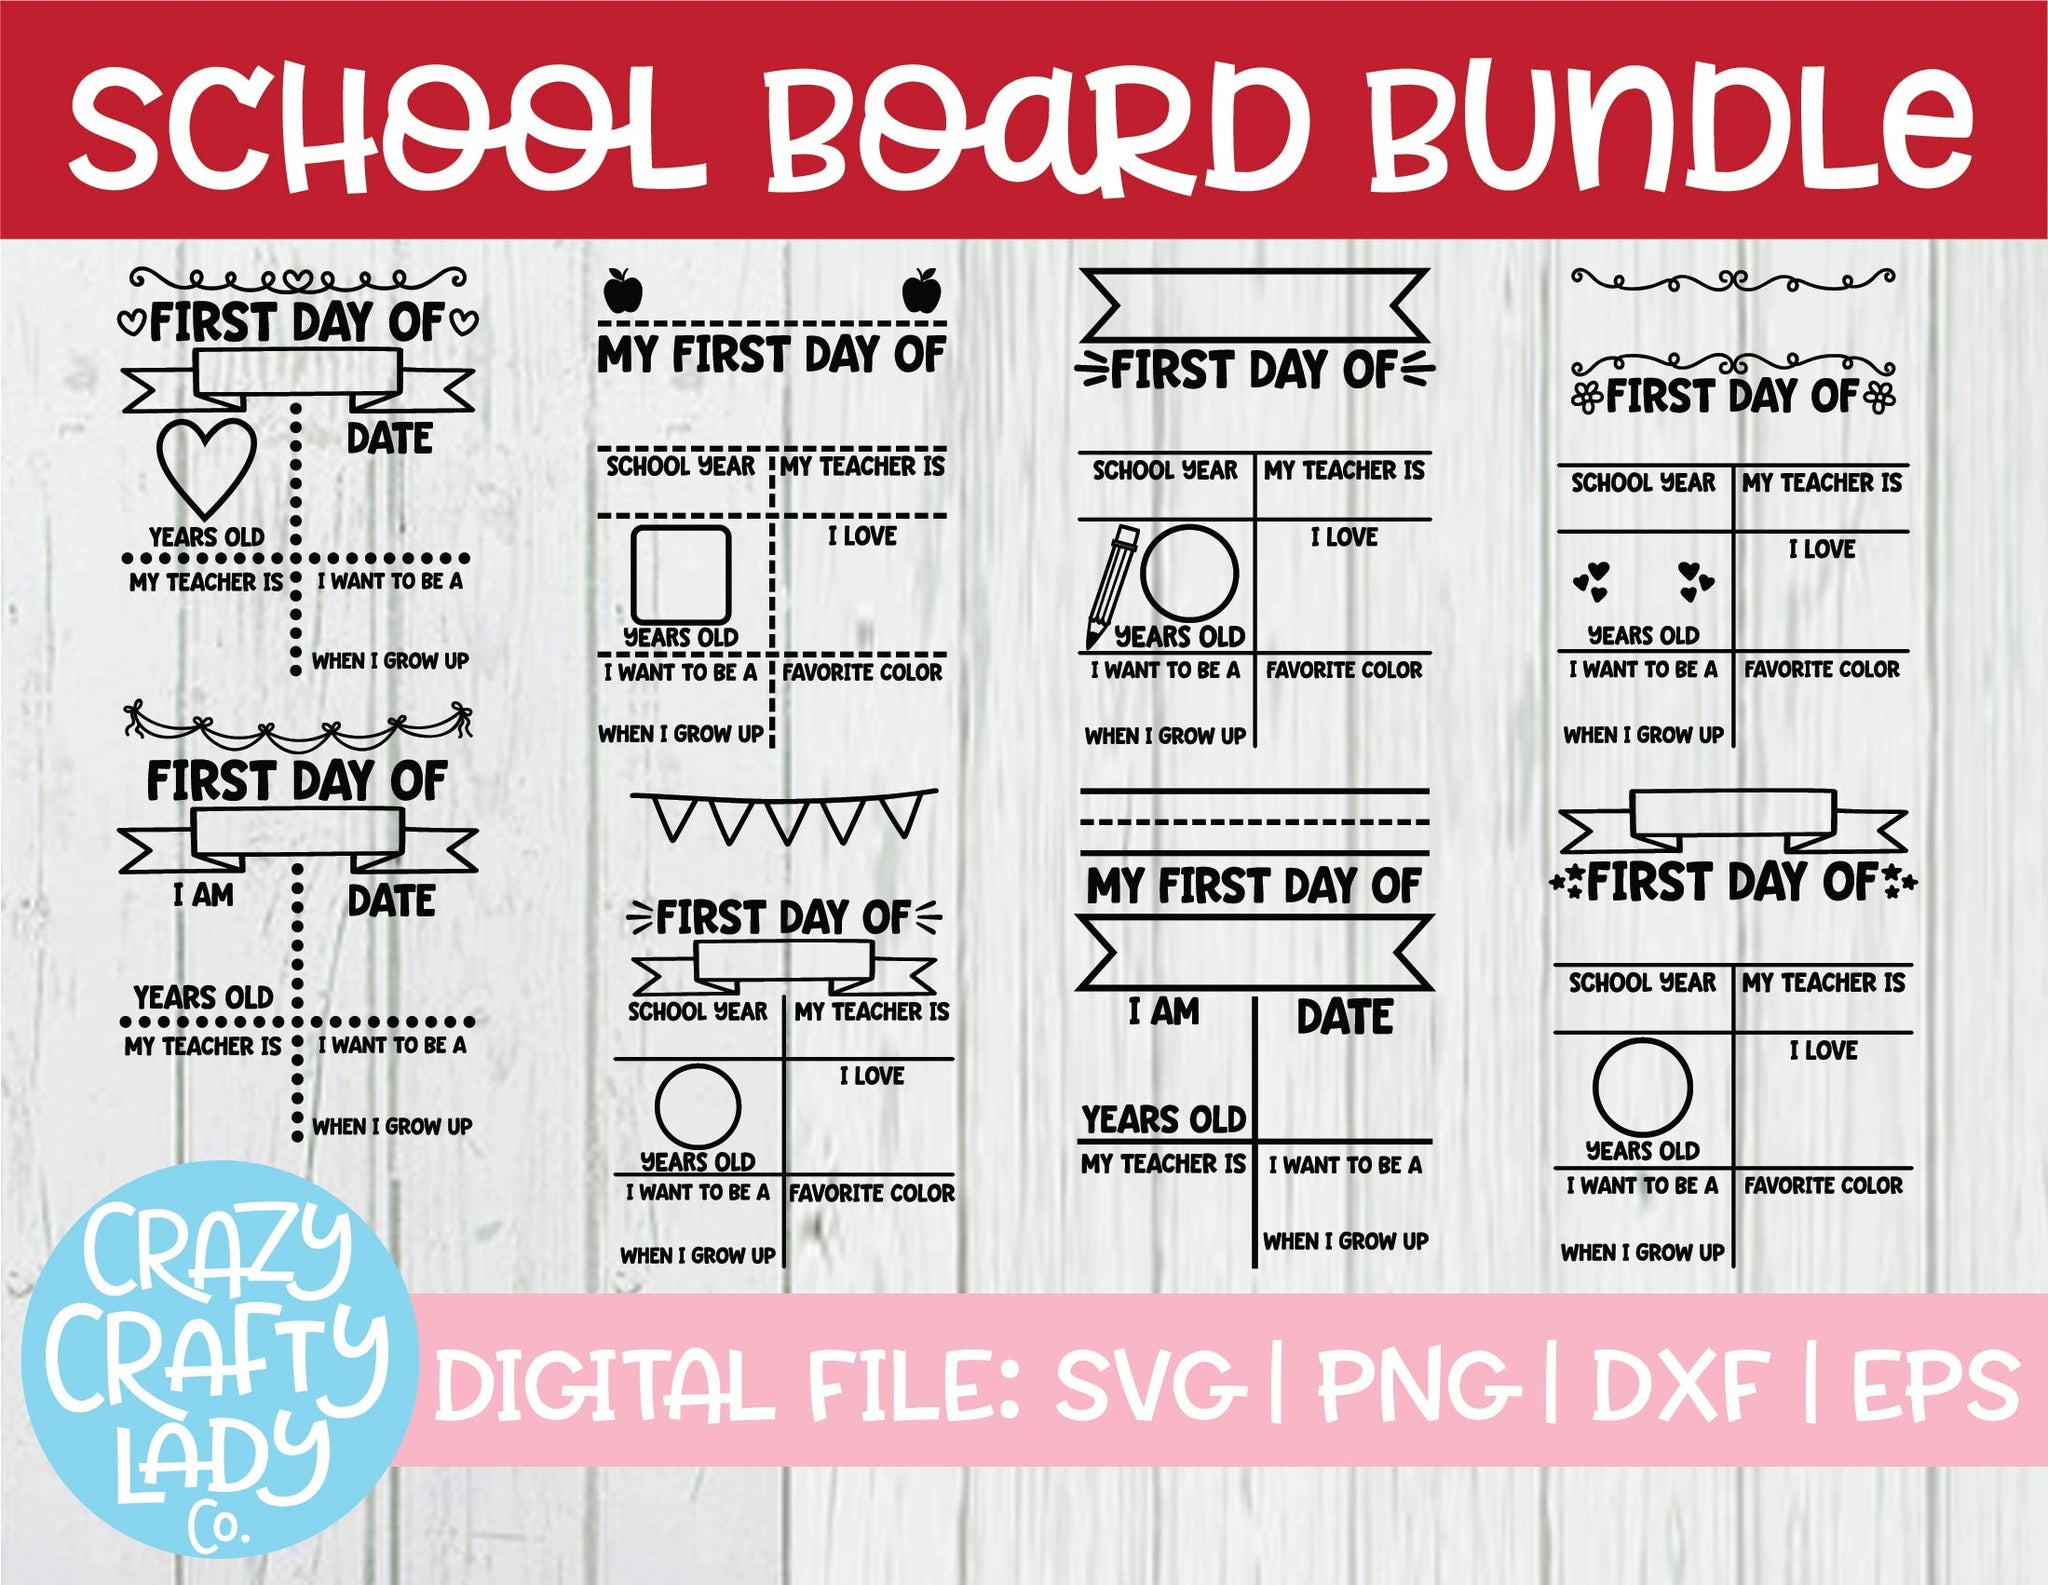 First Day of School Board SVG Cut File – Crazy Crafty Lady Co.